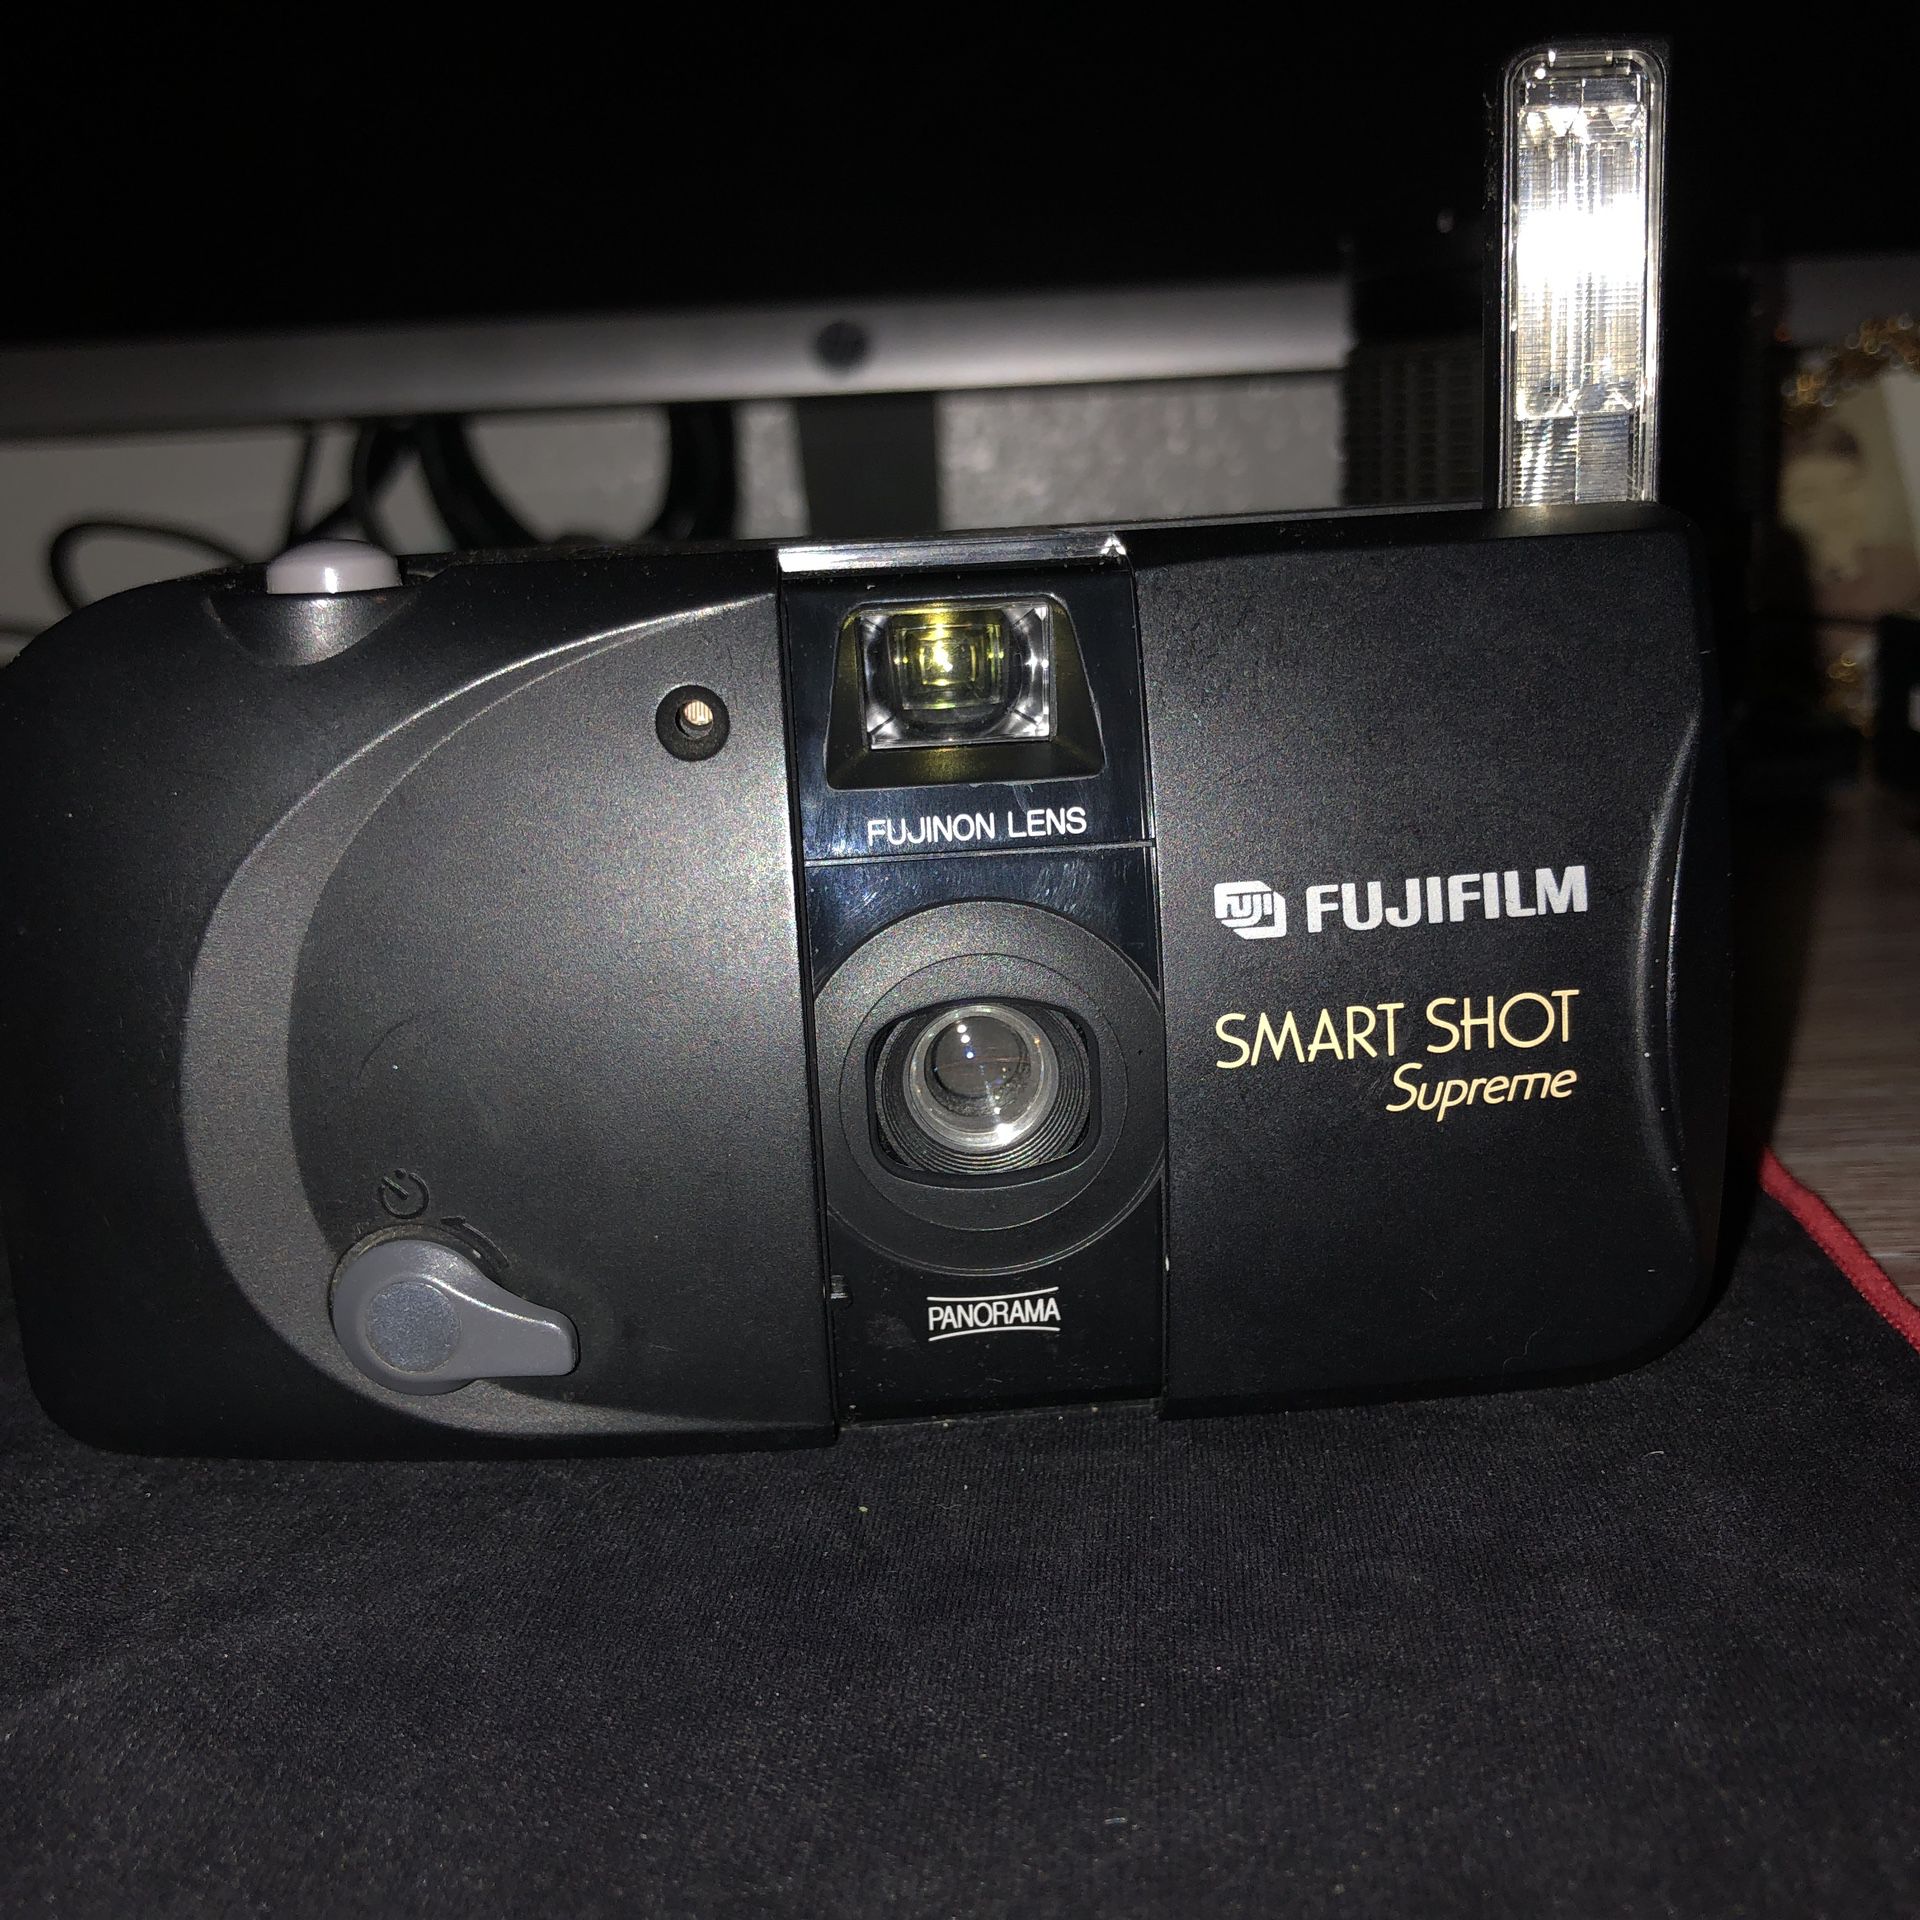 Fujifilm smart shot supreme film camera